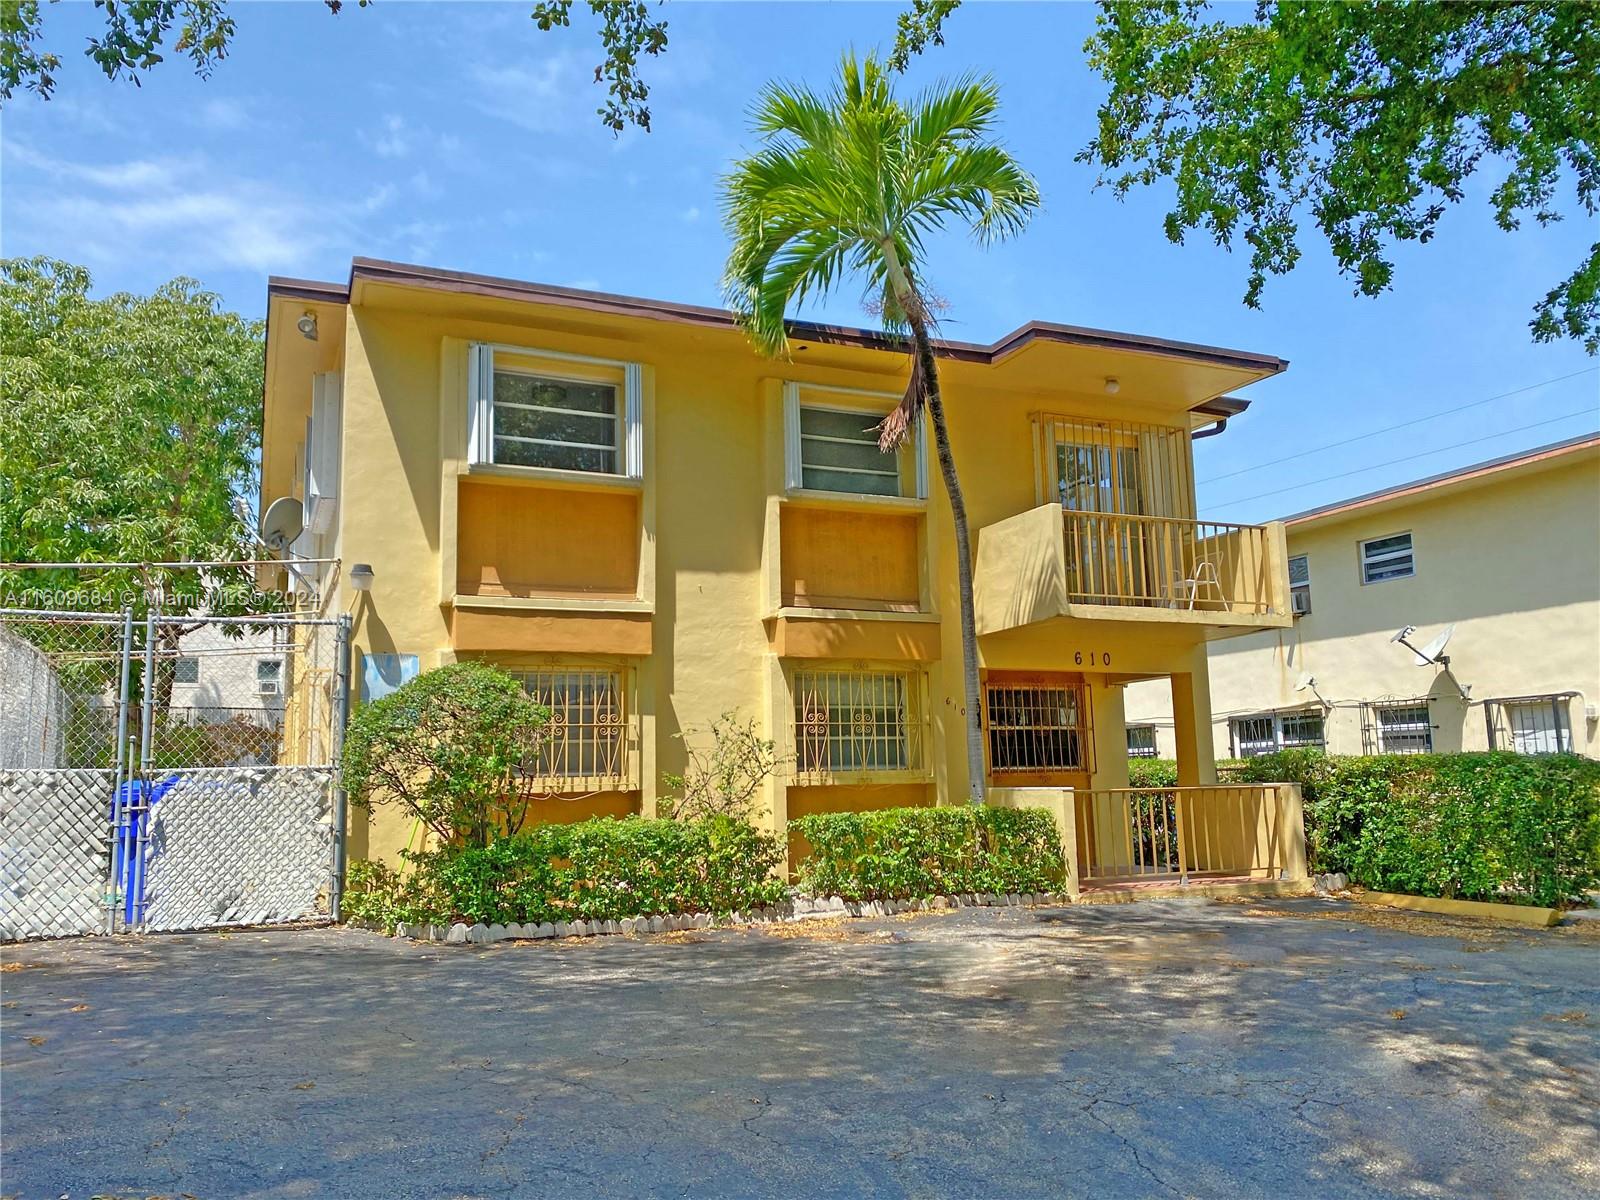 Rental Property at 610 Sw 6th Ave, Miami, Broward County, Florida -  - $1,075,000 MO.